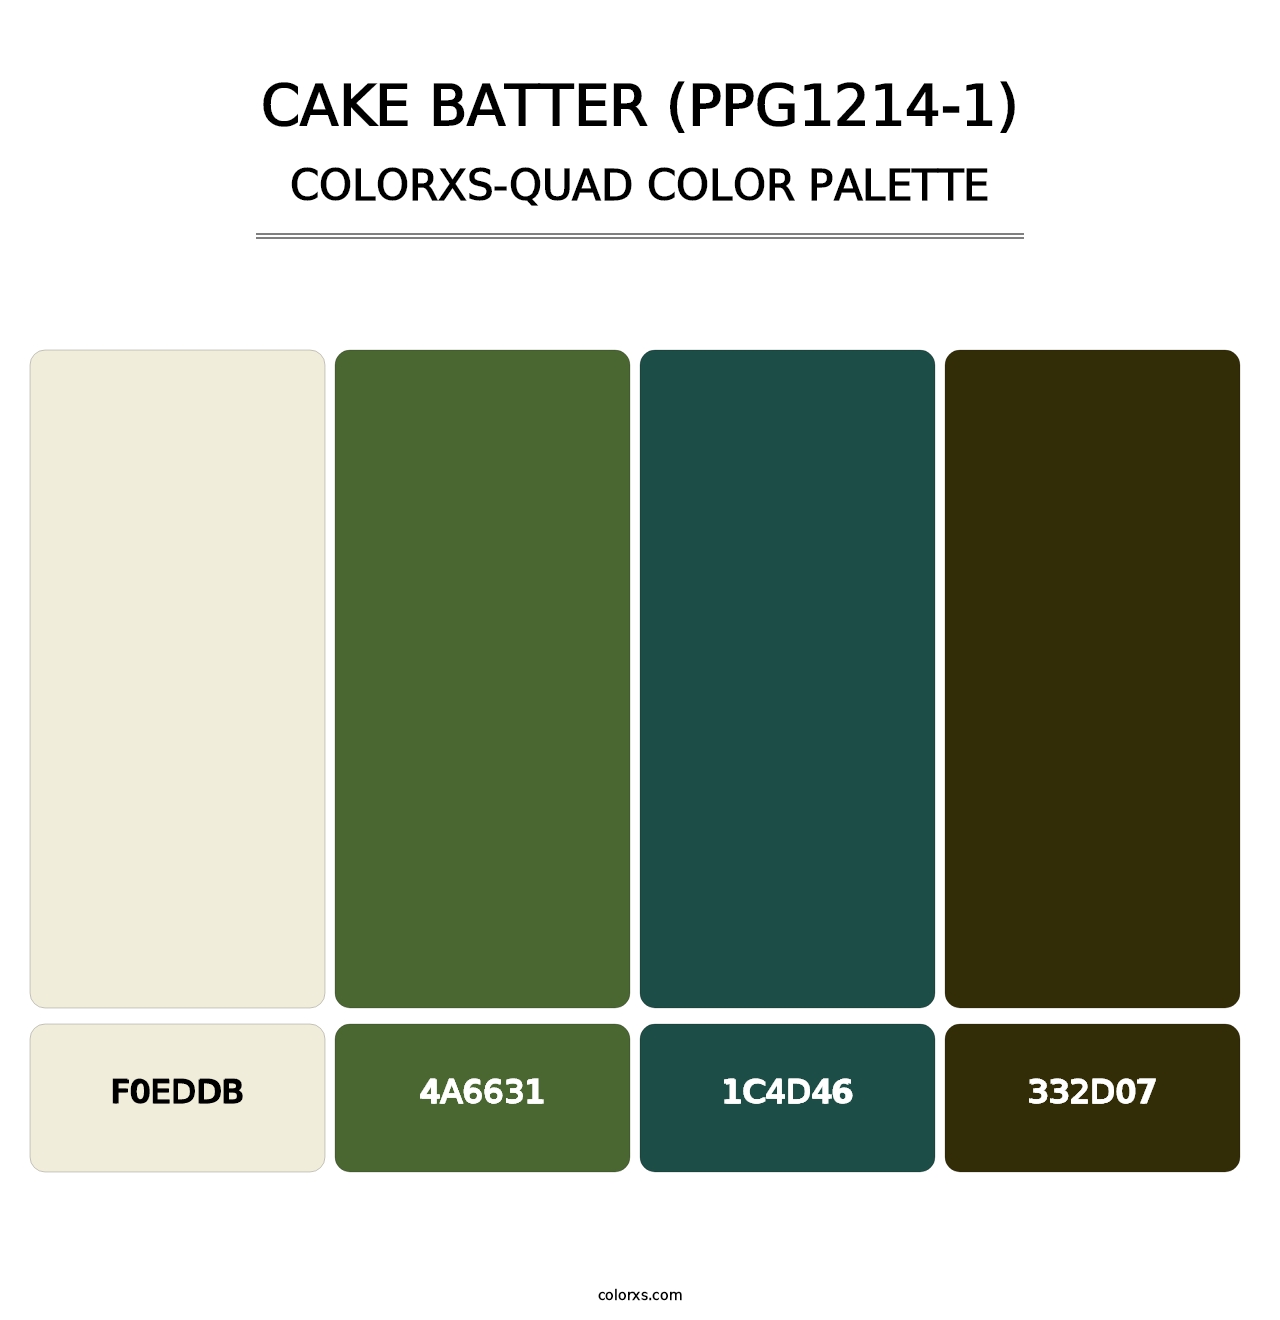 Cake Batter (PPG1214-1) - Colorxs Quad Palette